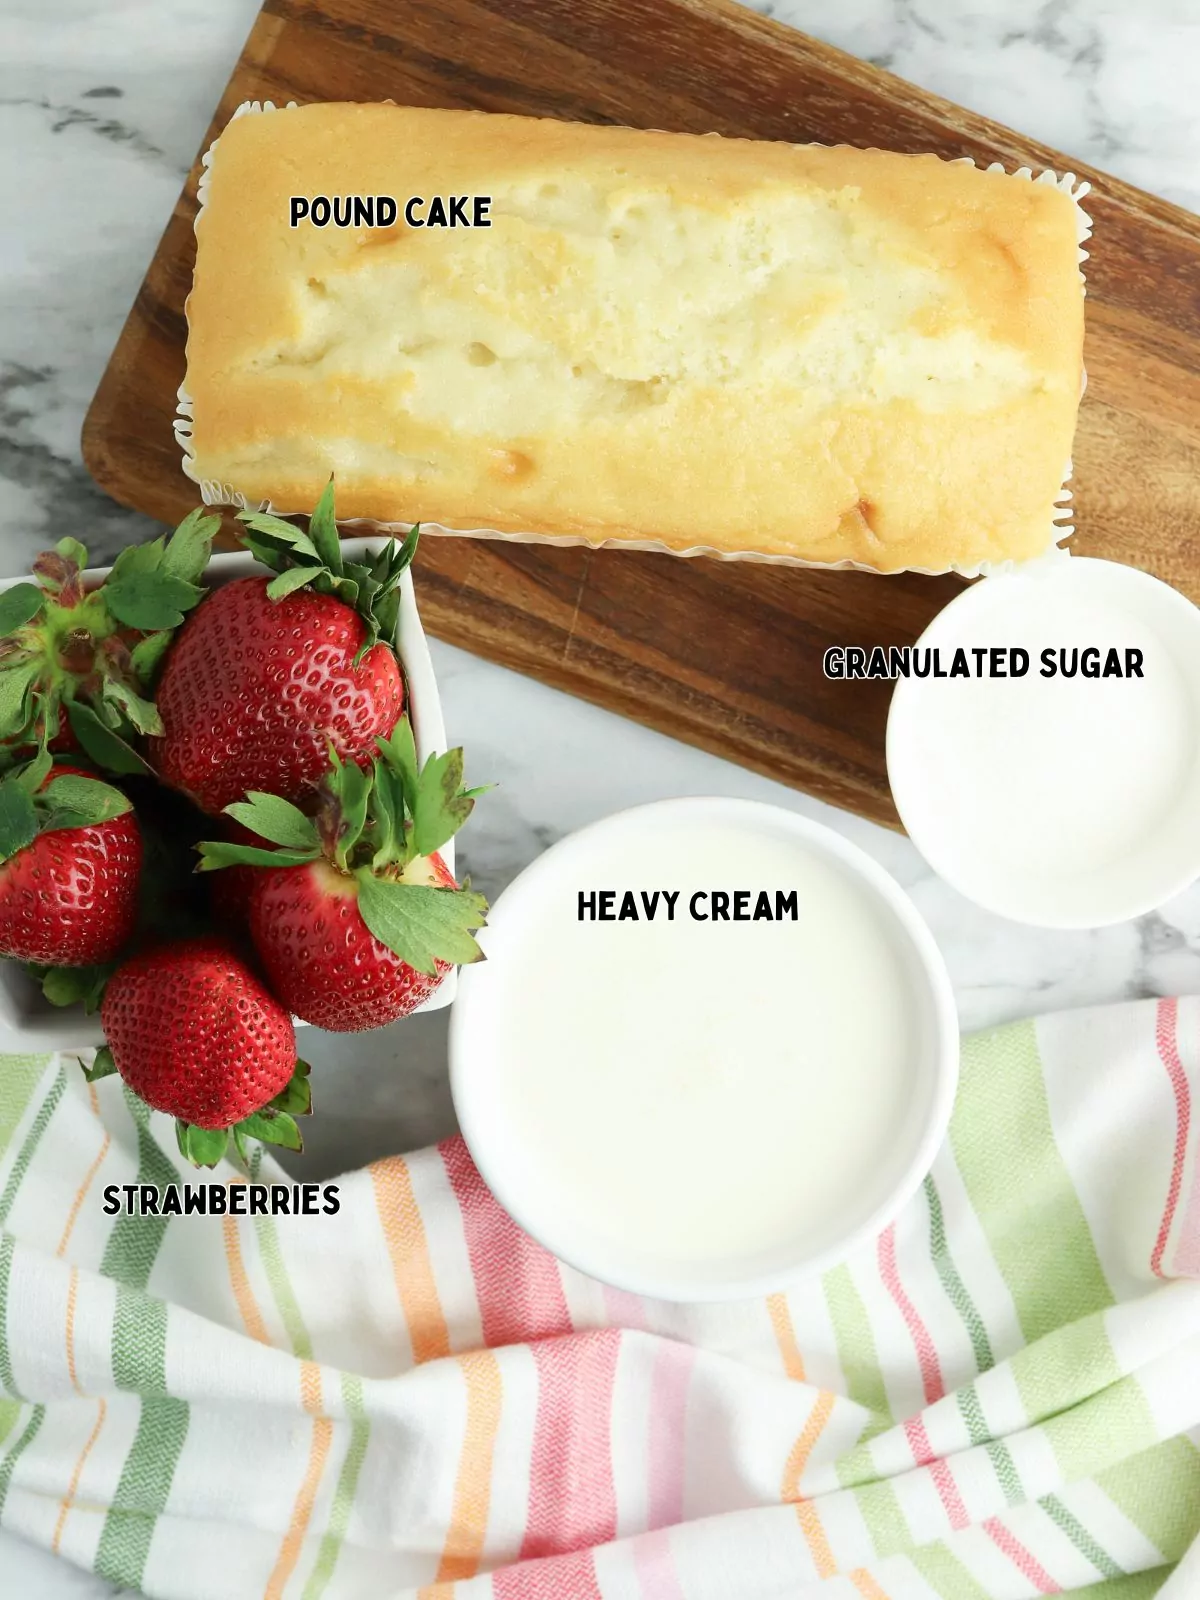 ingredients of pound cake, heavy cream, sugar and strawberries.